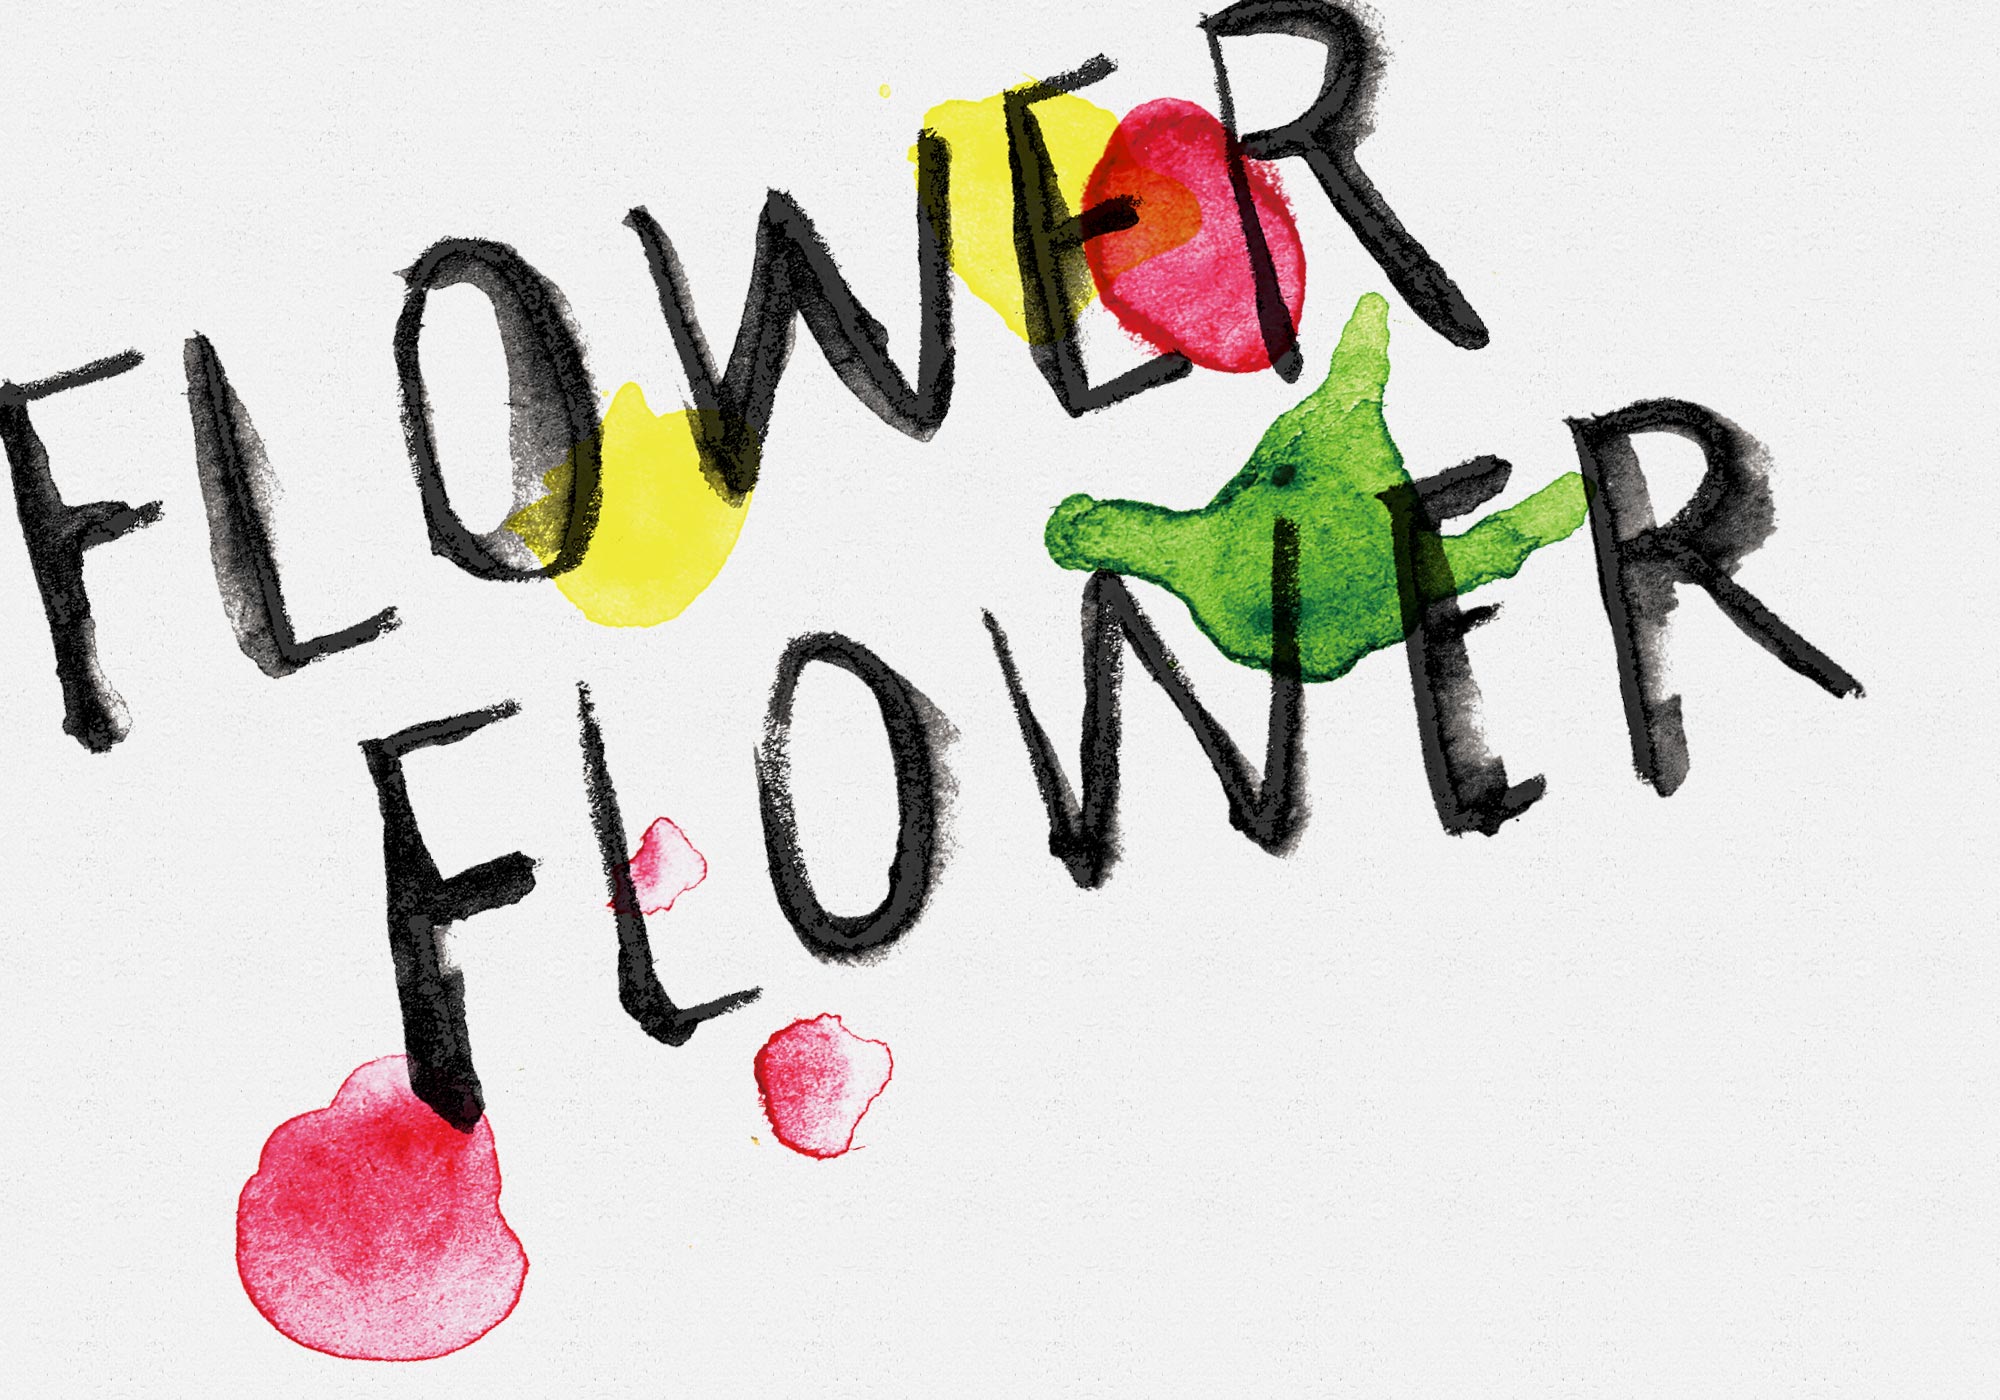 Flower Flower Official Website